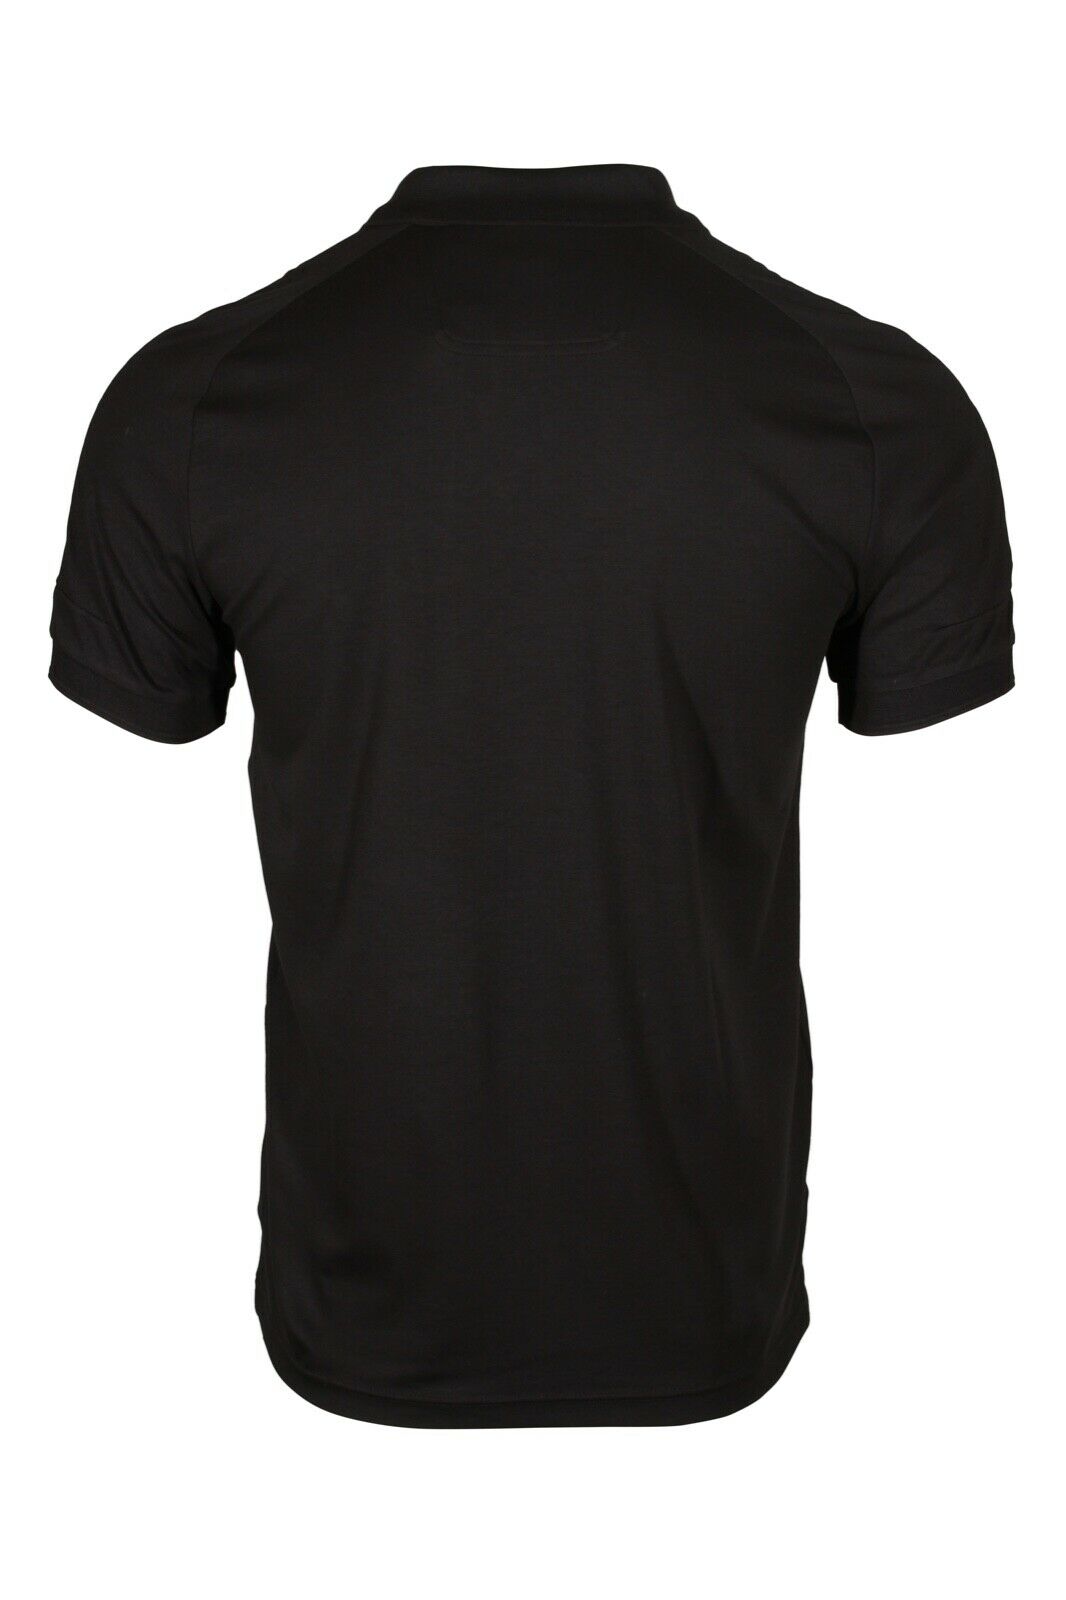 HUGO BOSS Paule 2 Men's Logo Polo Shirt in Organic Cotton in Black 50462230 001